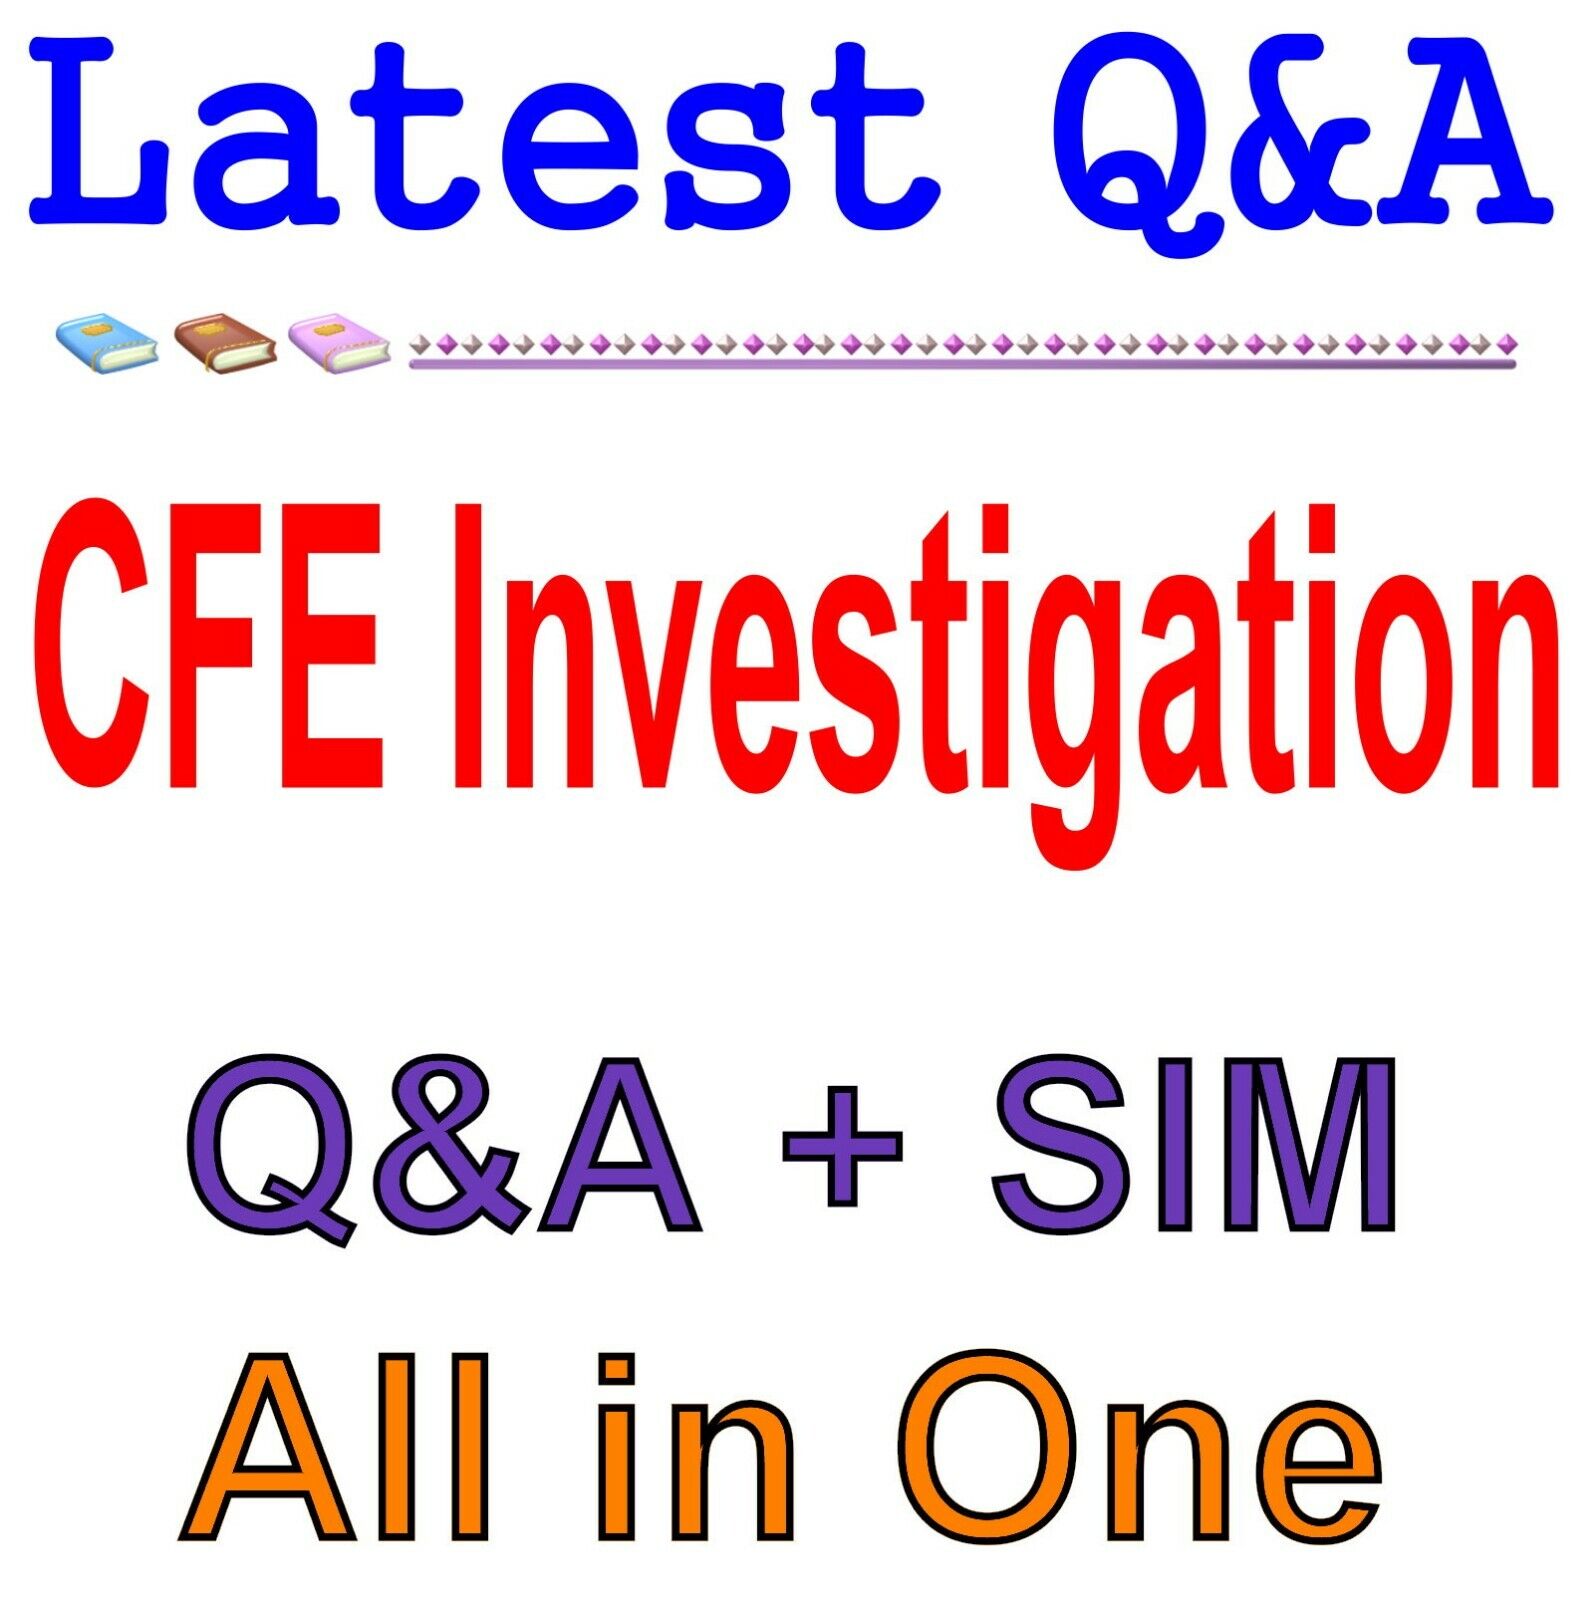 Certified Fraud Examiner - CFE Investigation Exam Q&A+SIM